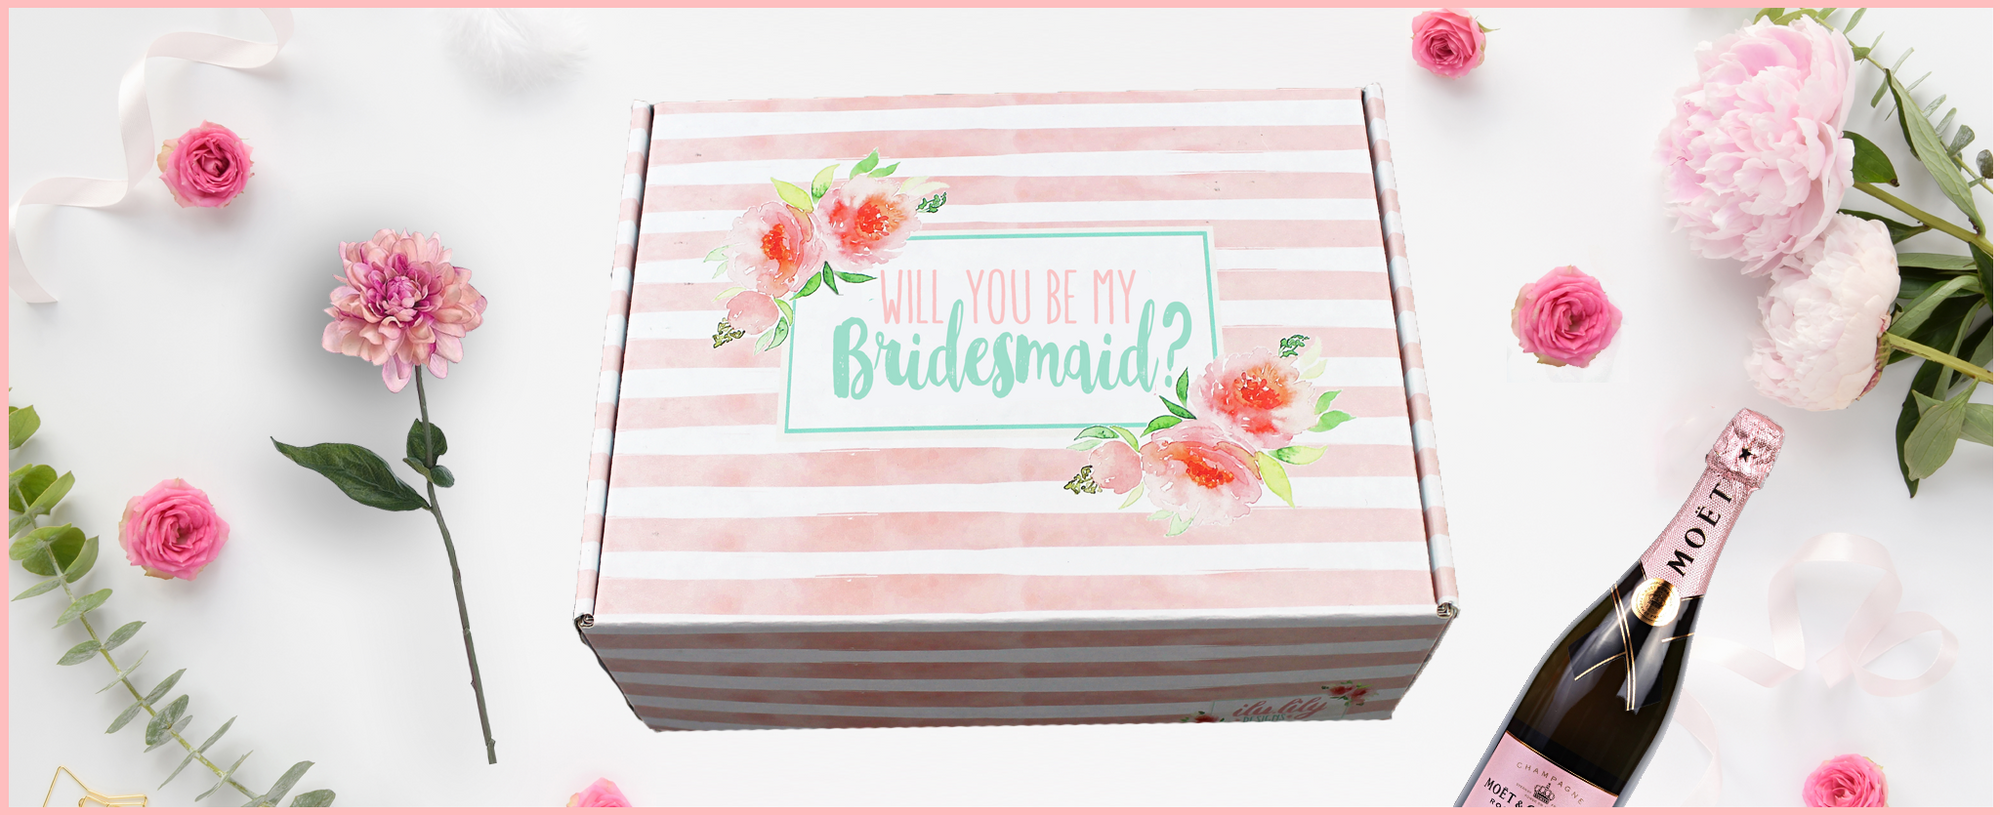 Bridal Party Proposal Boxes